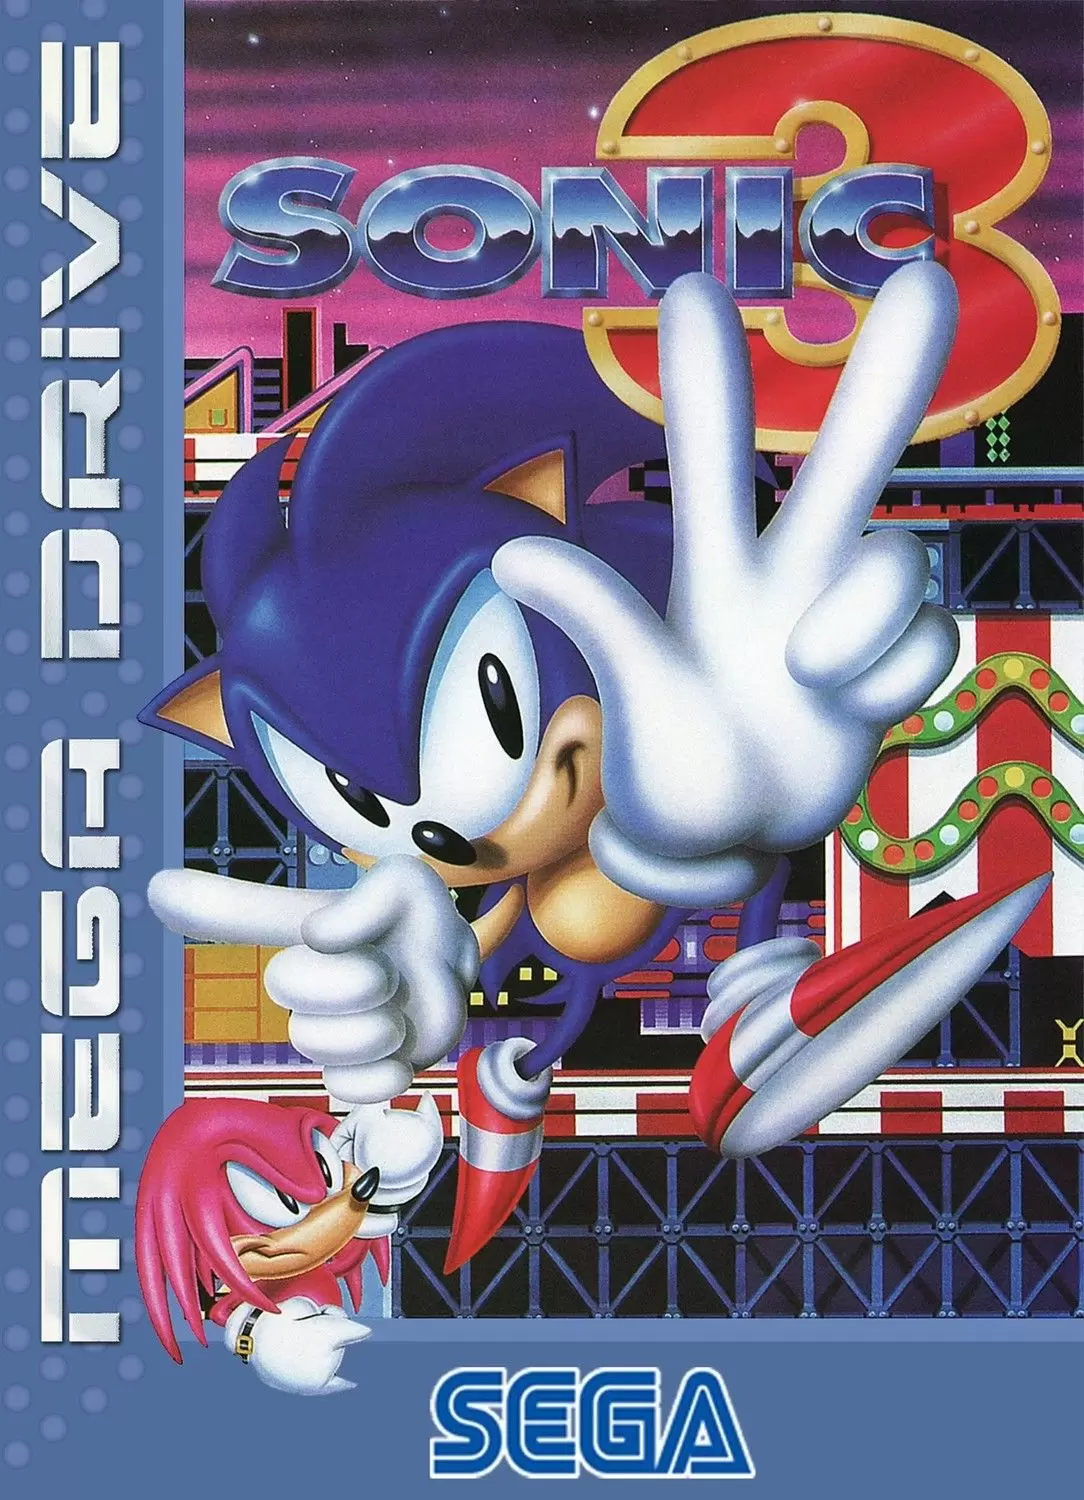 Sega Genesis Games - Sonic the Hedgehog 3